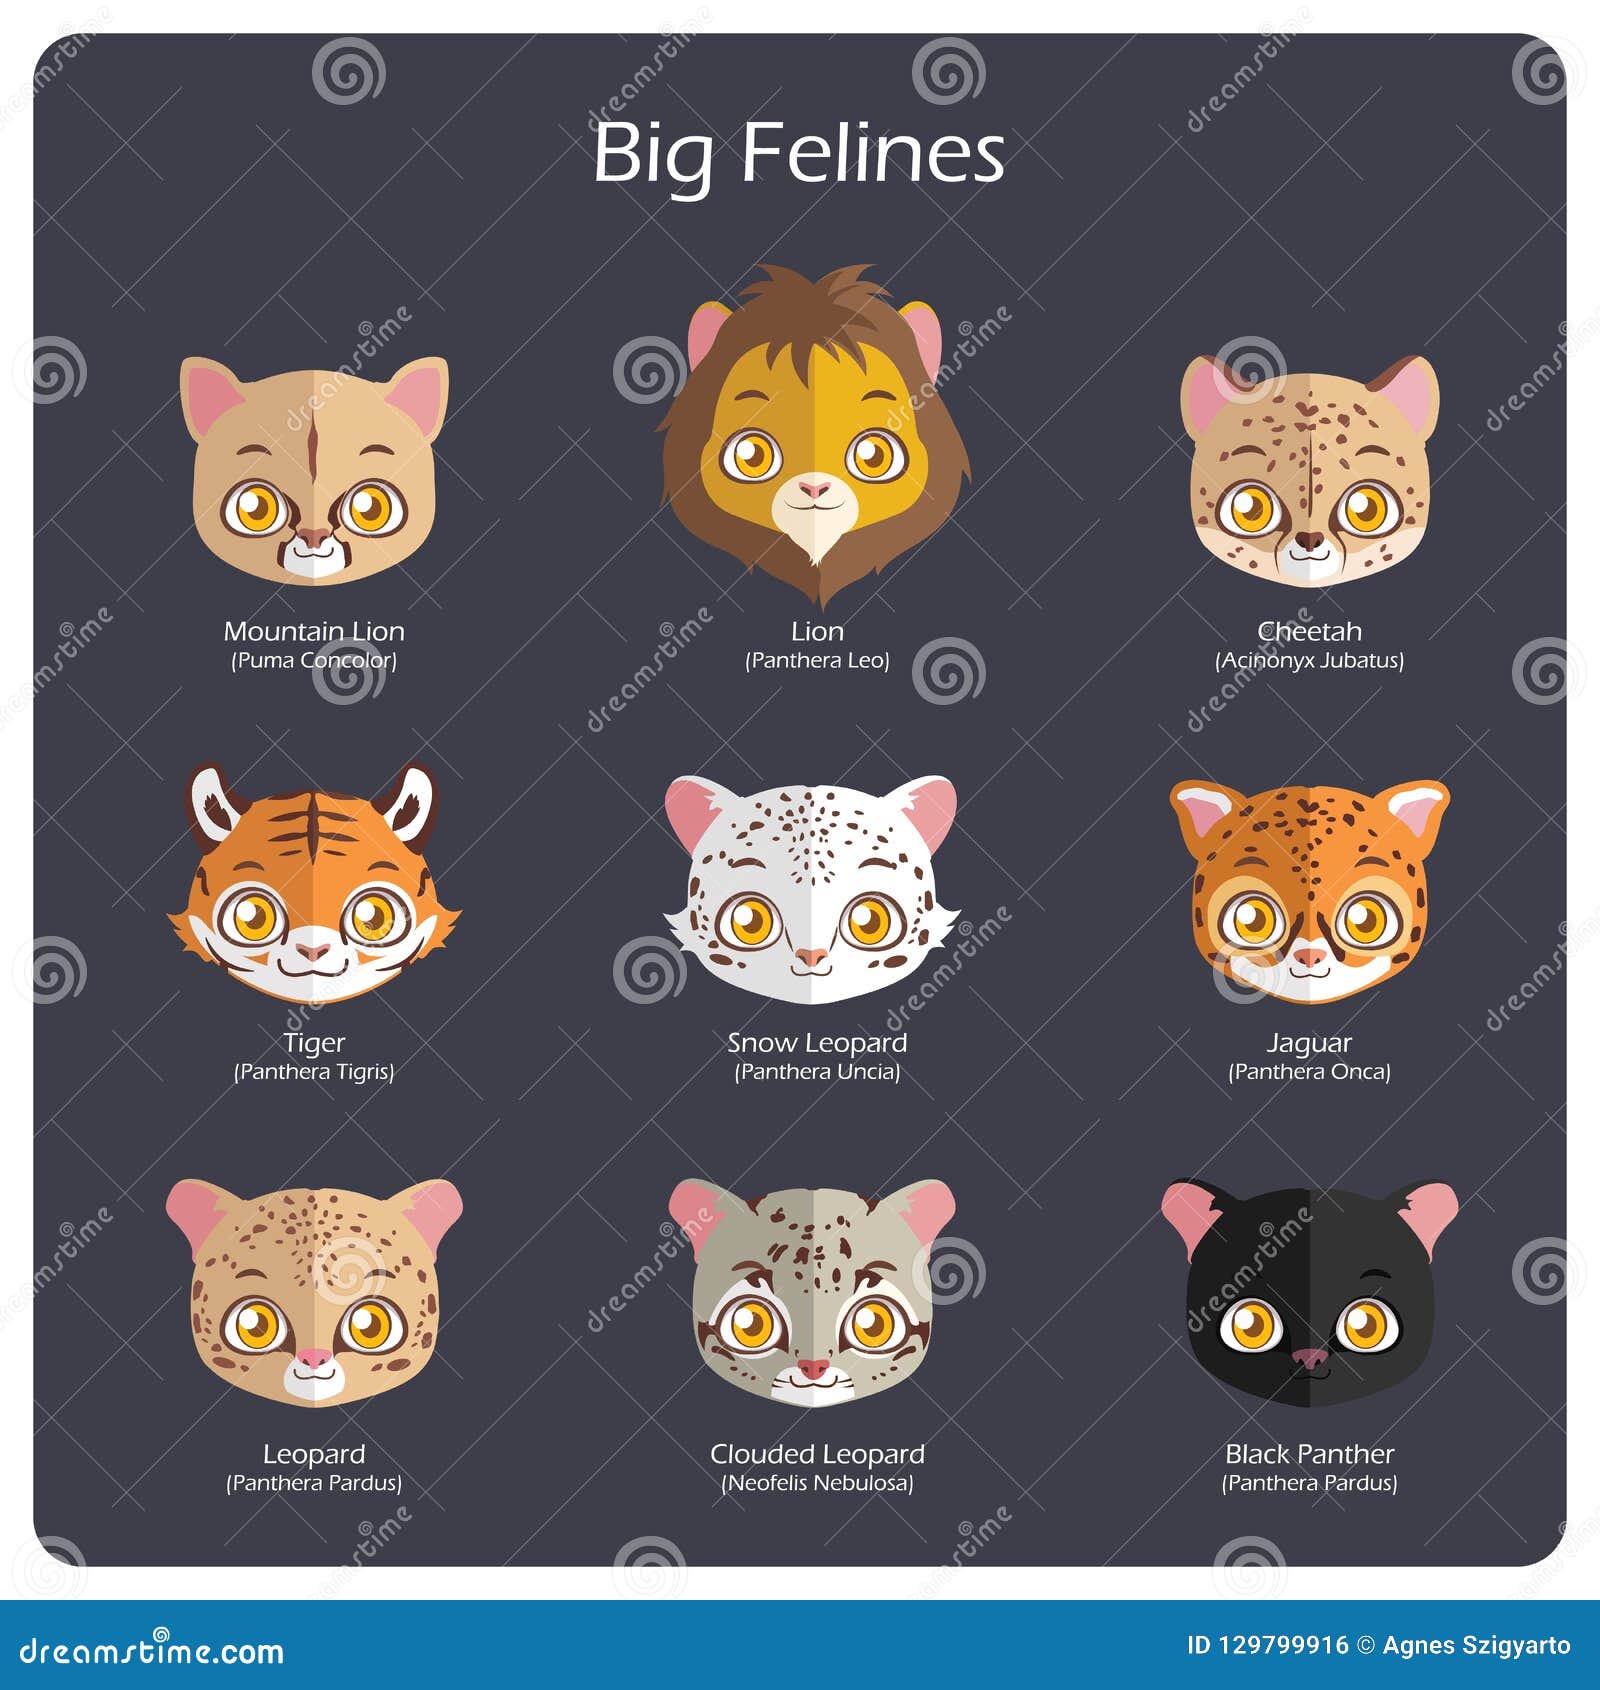 big feline flat avatars with regular and scientific names